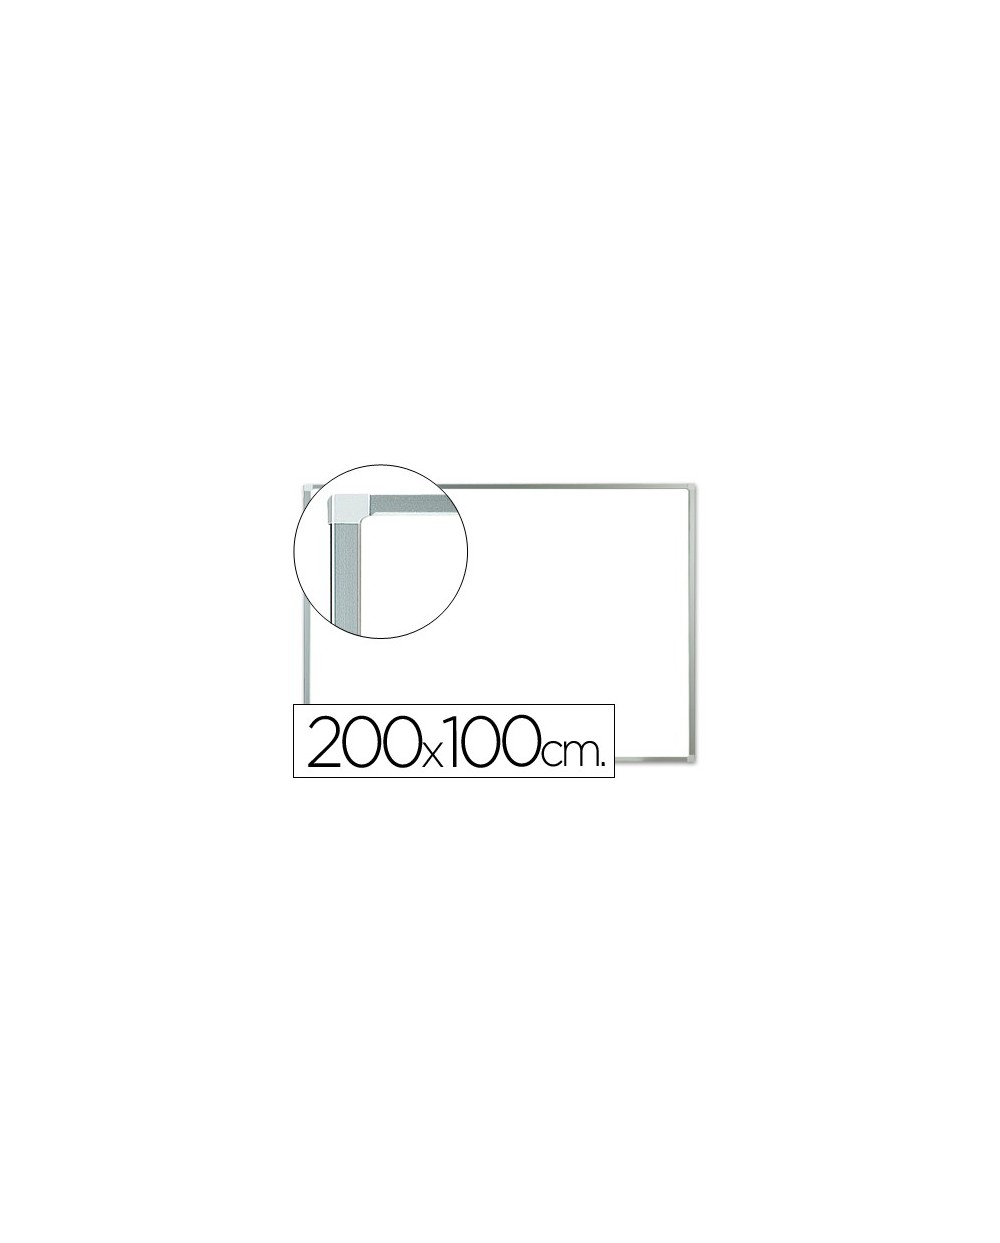 Pizarra blanca q connect lacada magnetica marco de aluminio 200x100 cm